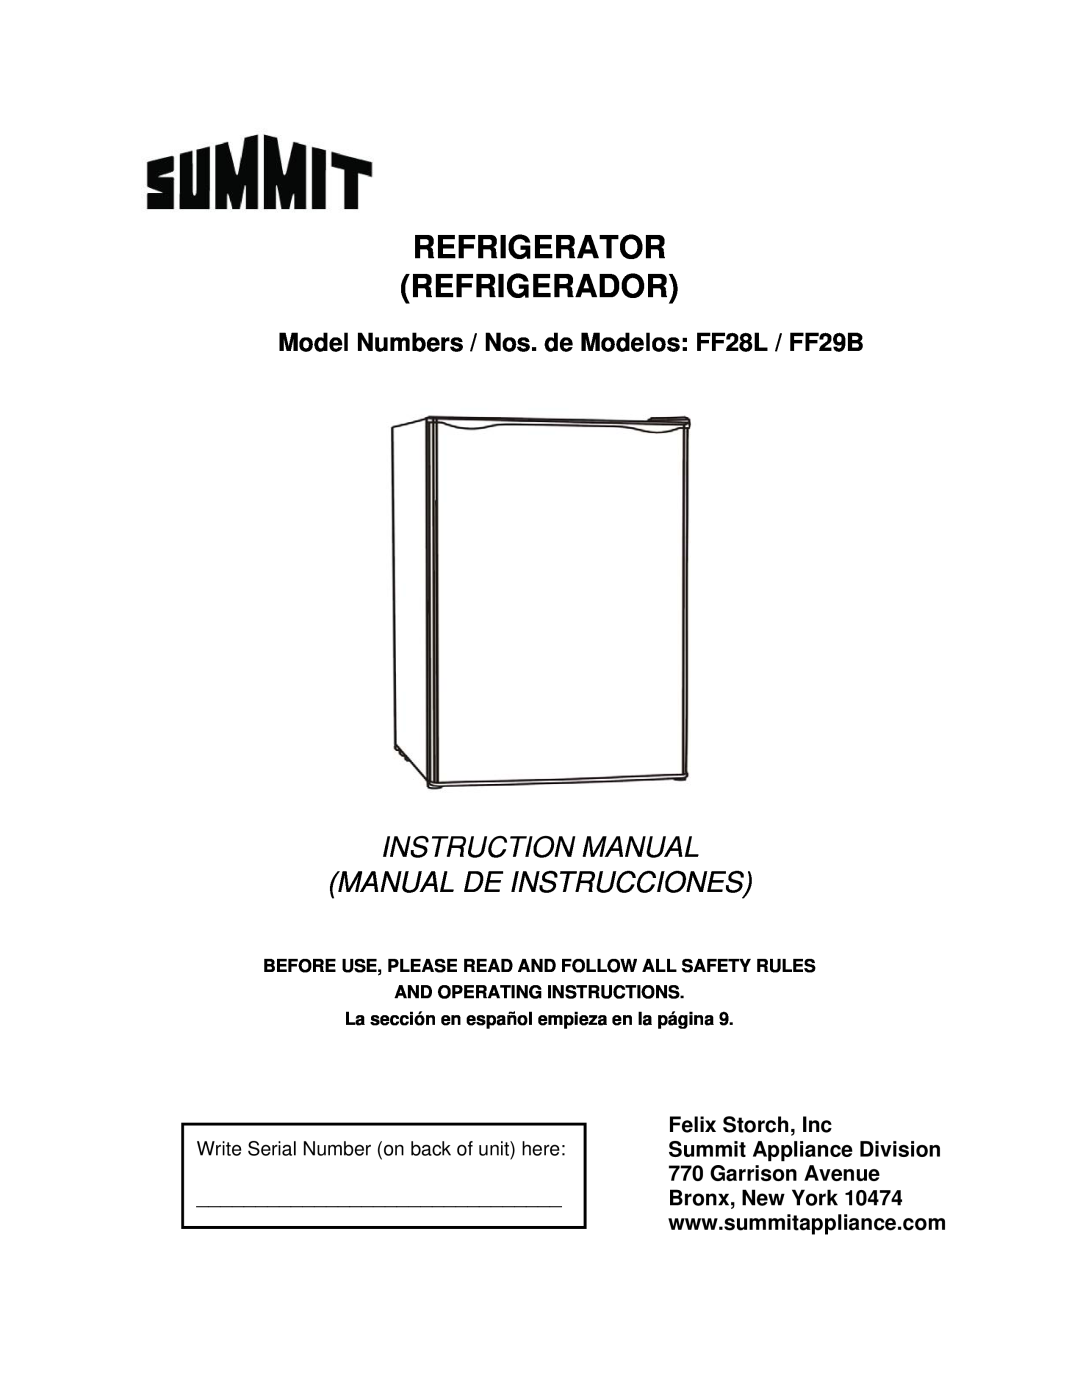 Summit FF28L instruction manual Refrigerator Refrigerador, Felix Storch, Inc, Write Serial Number on back of unit here 